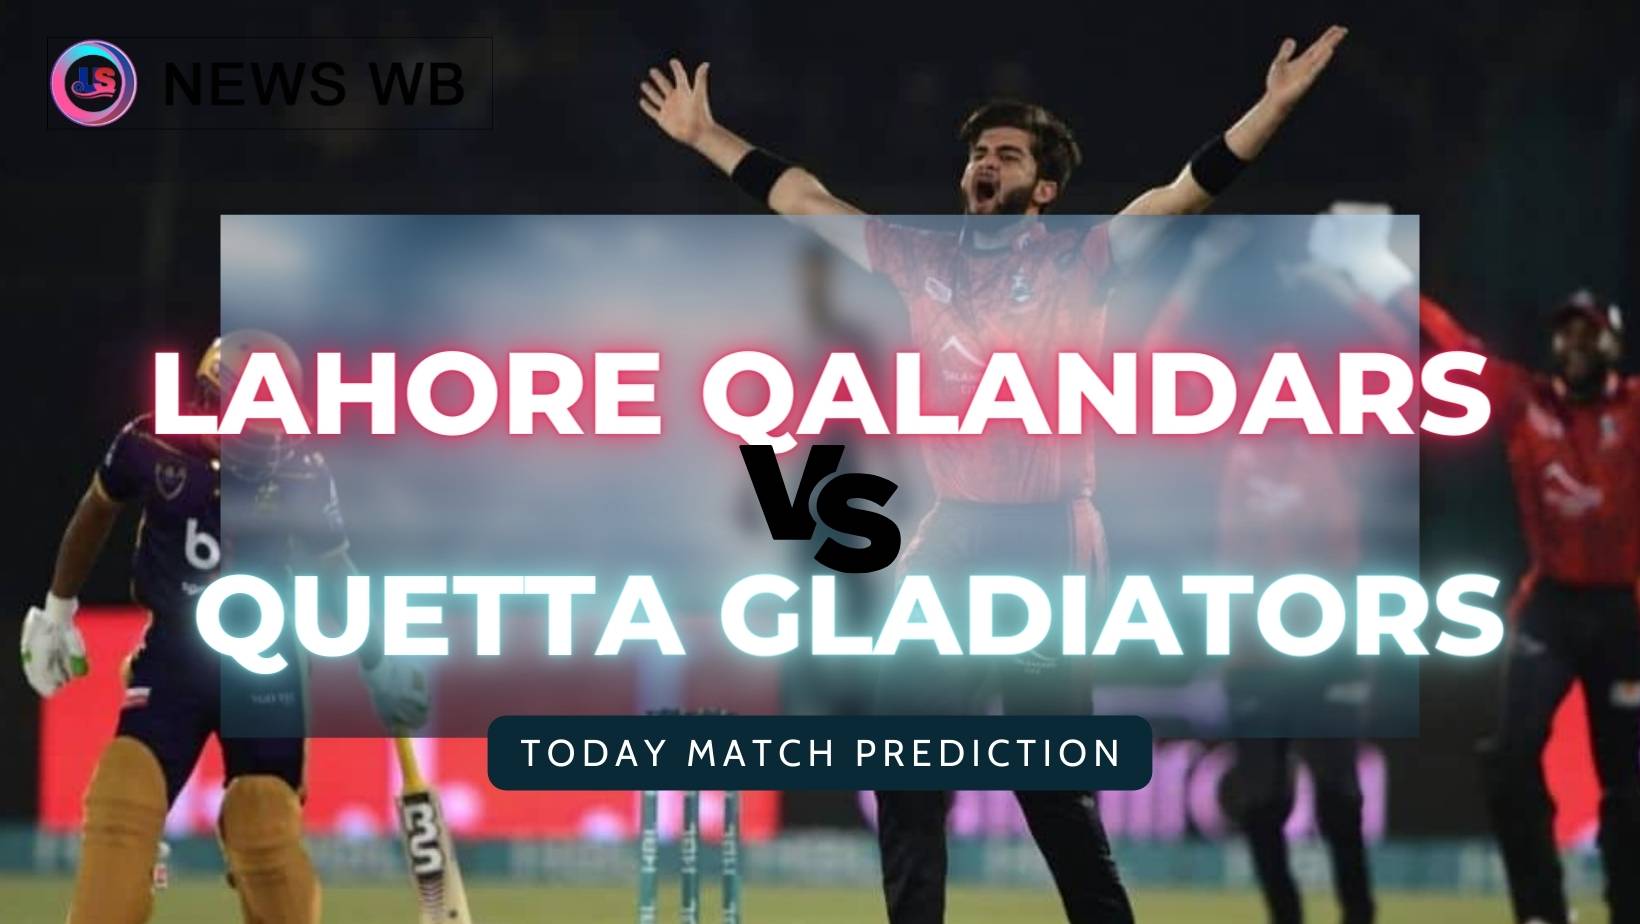 Today Match Prediction: LHQ vs QTG Dream11 Team, Lahore Qalandars vs Quetta Gladiators 4th Match, Who Will Win?